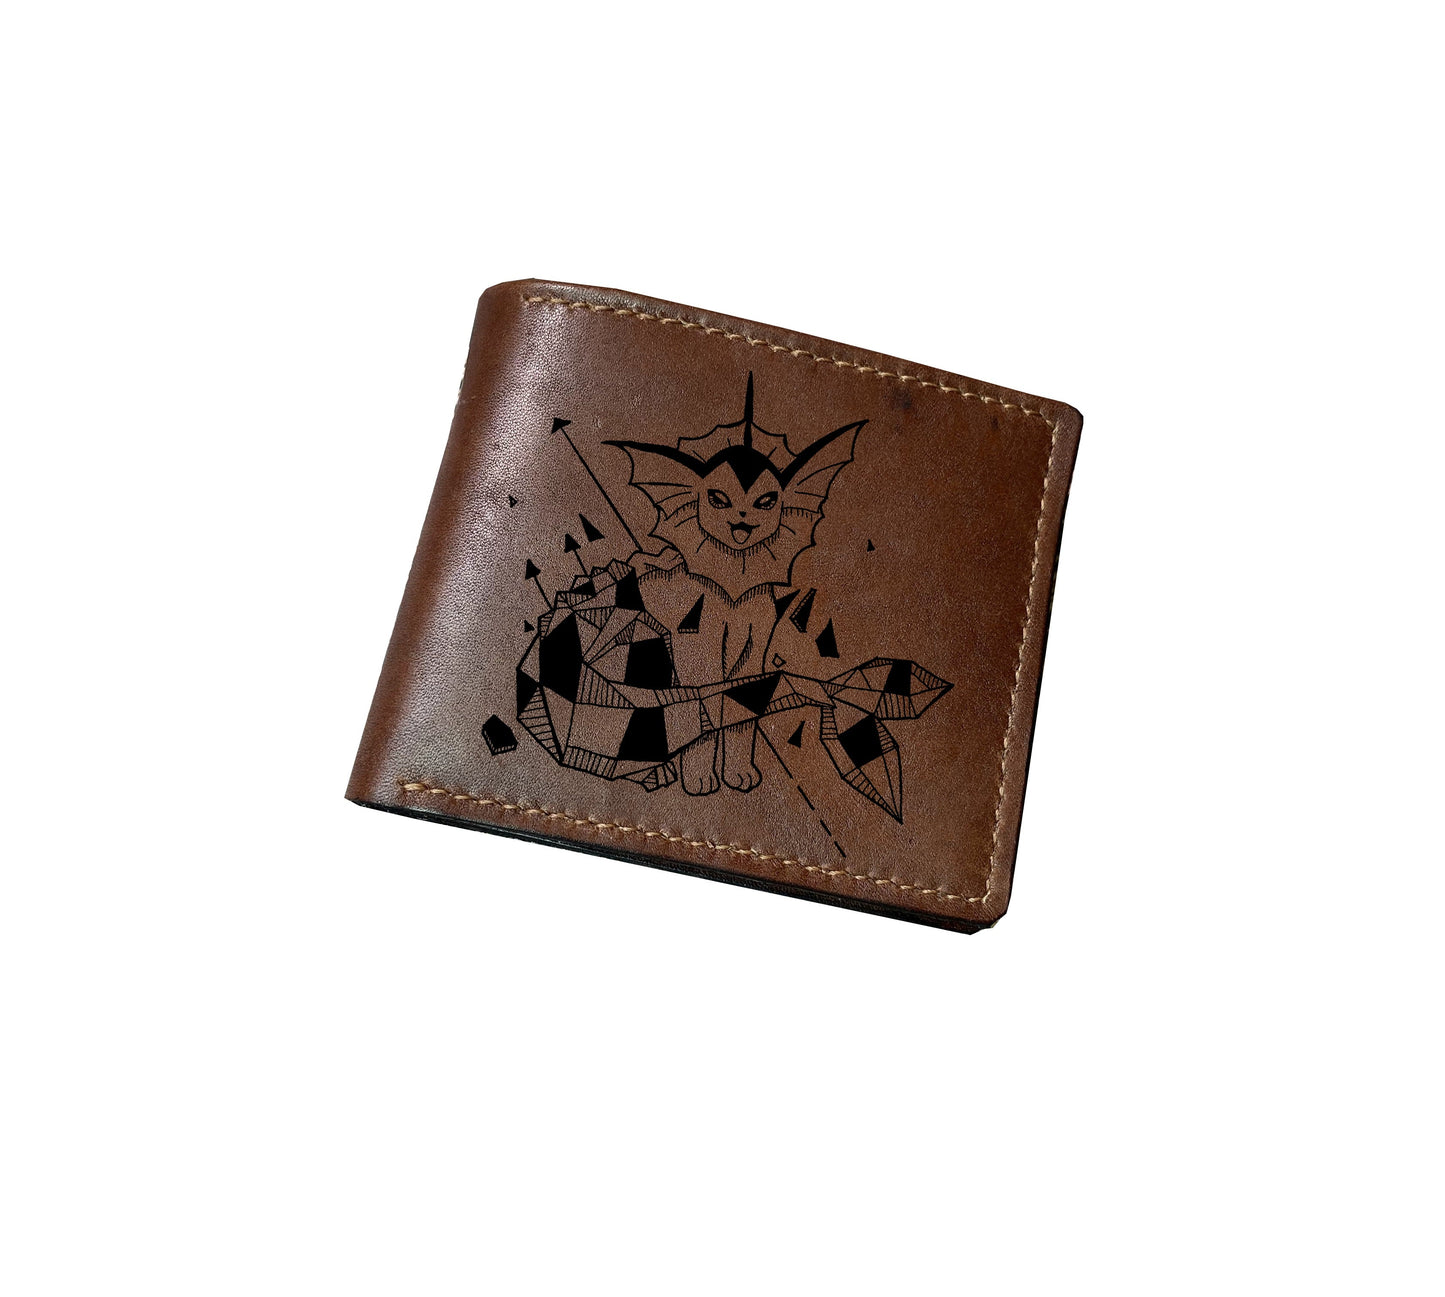 Mayan Corner - Pokemon geometric art leather handmade wallet, leather gift for dad, husband, brother - Venusaur/Fushigibana